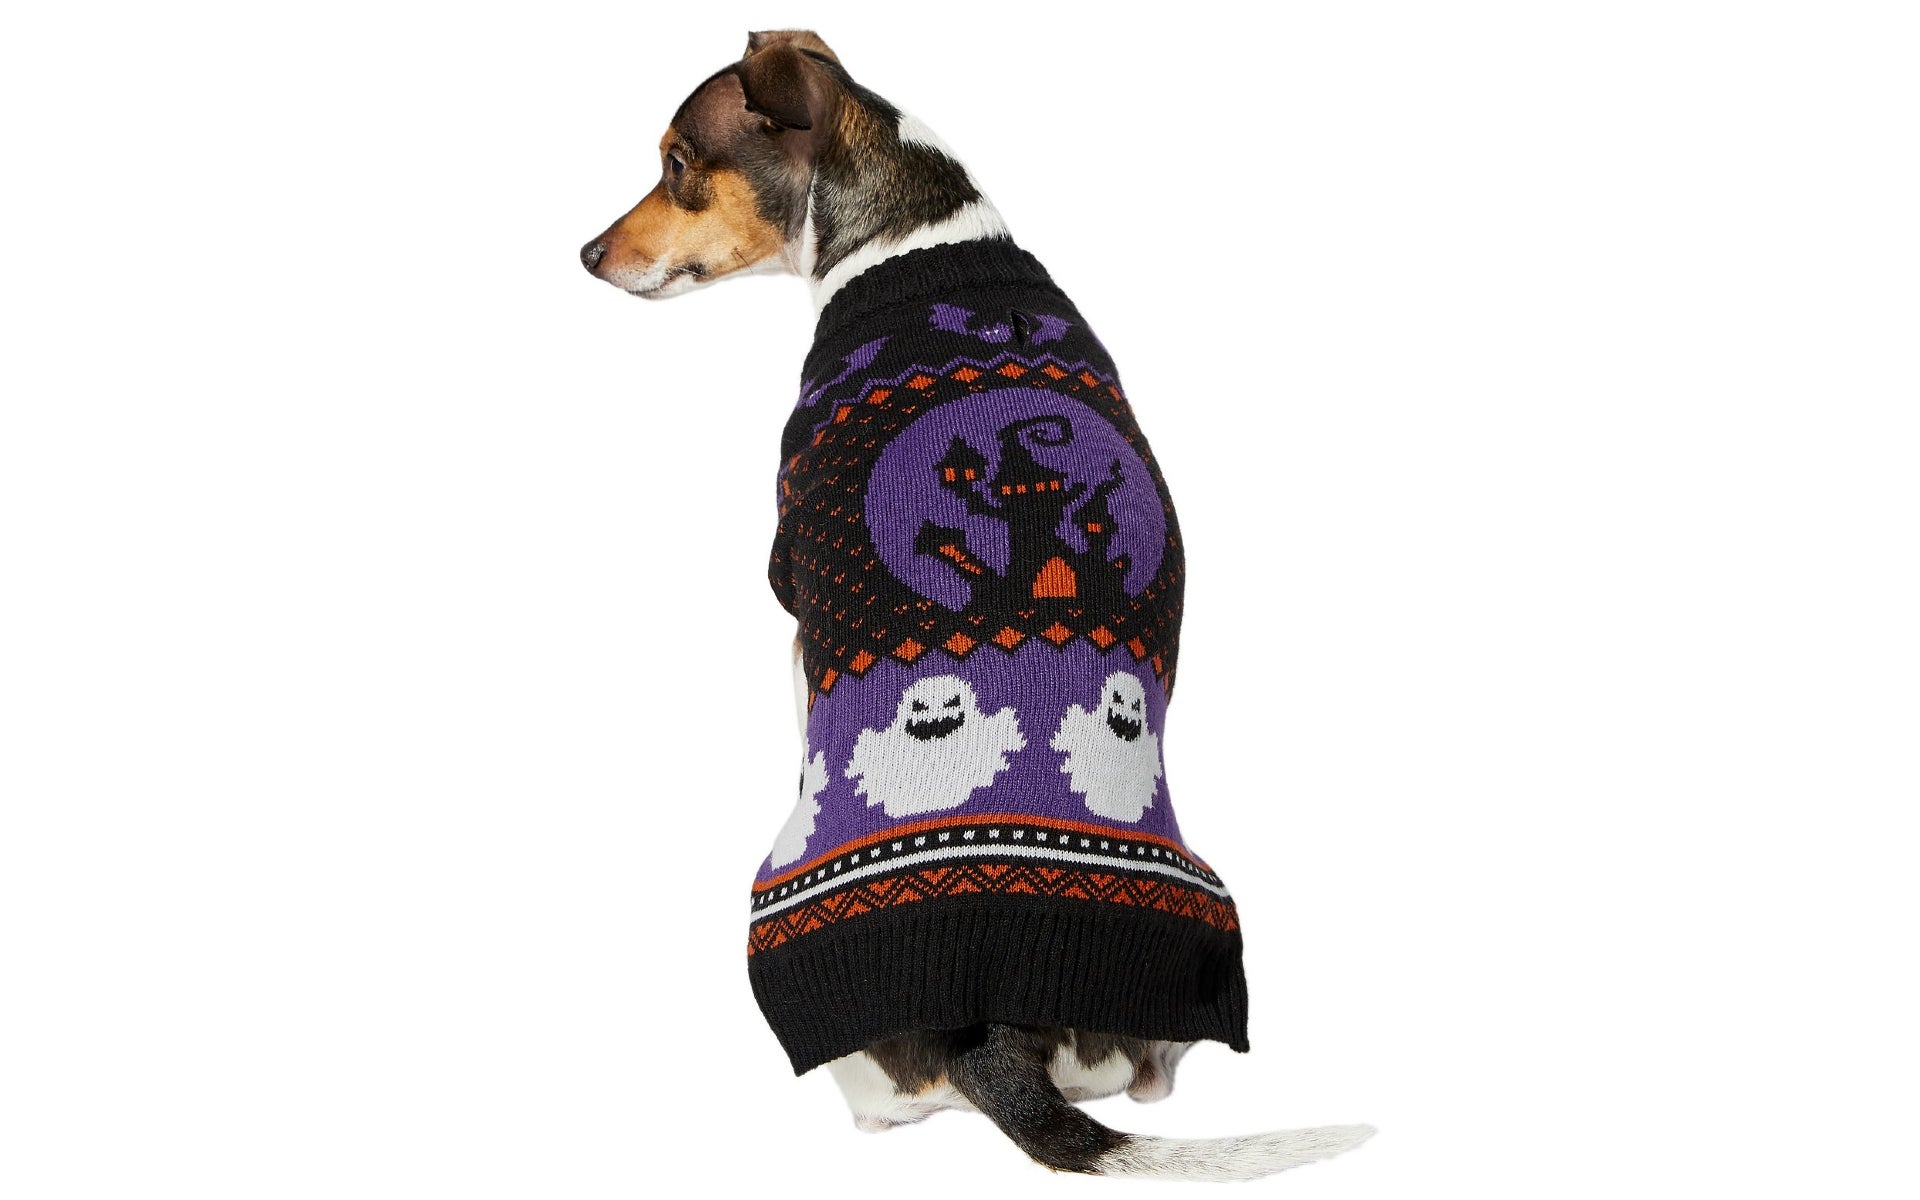 Dog in spooky sweater